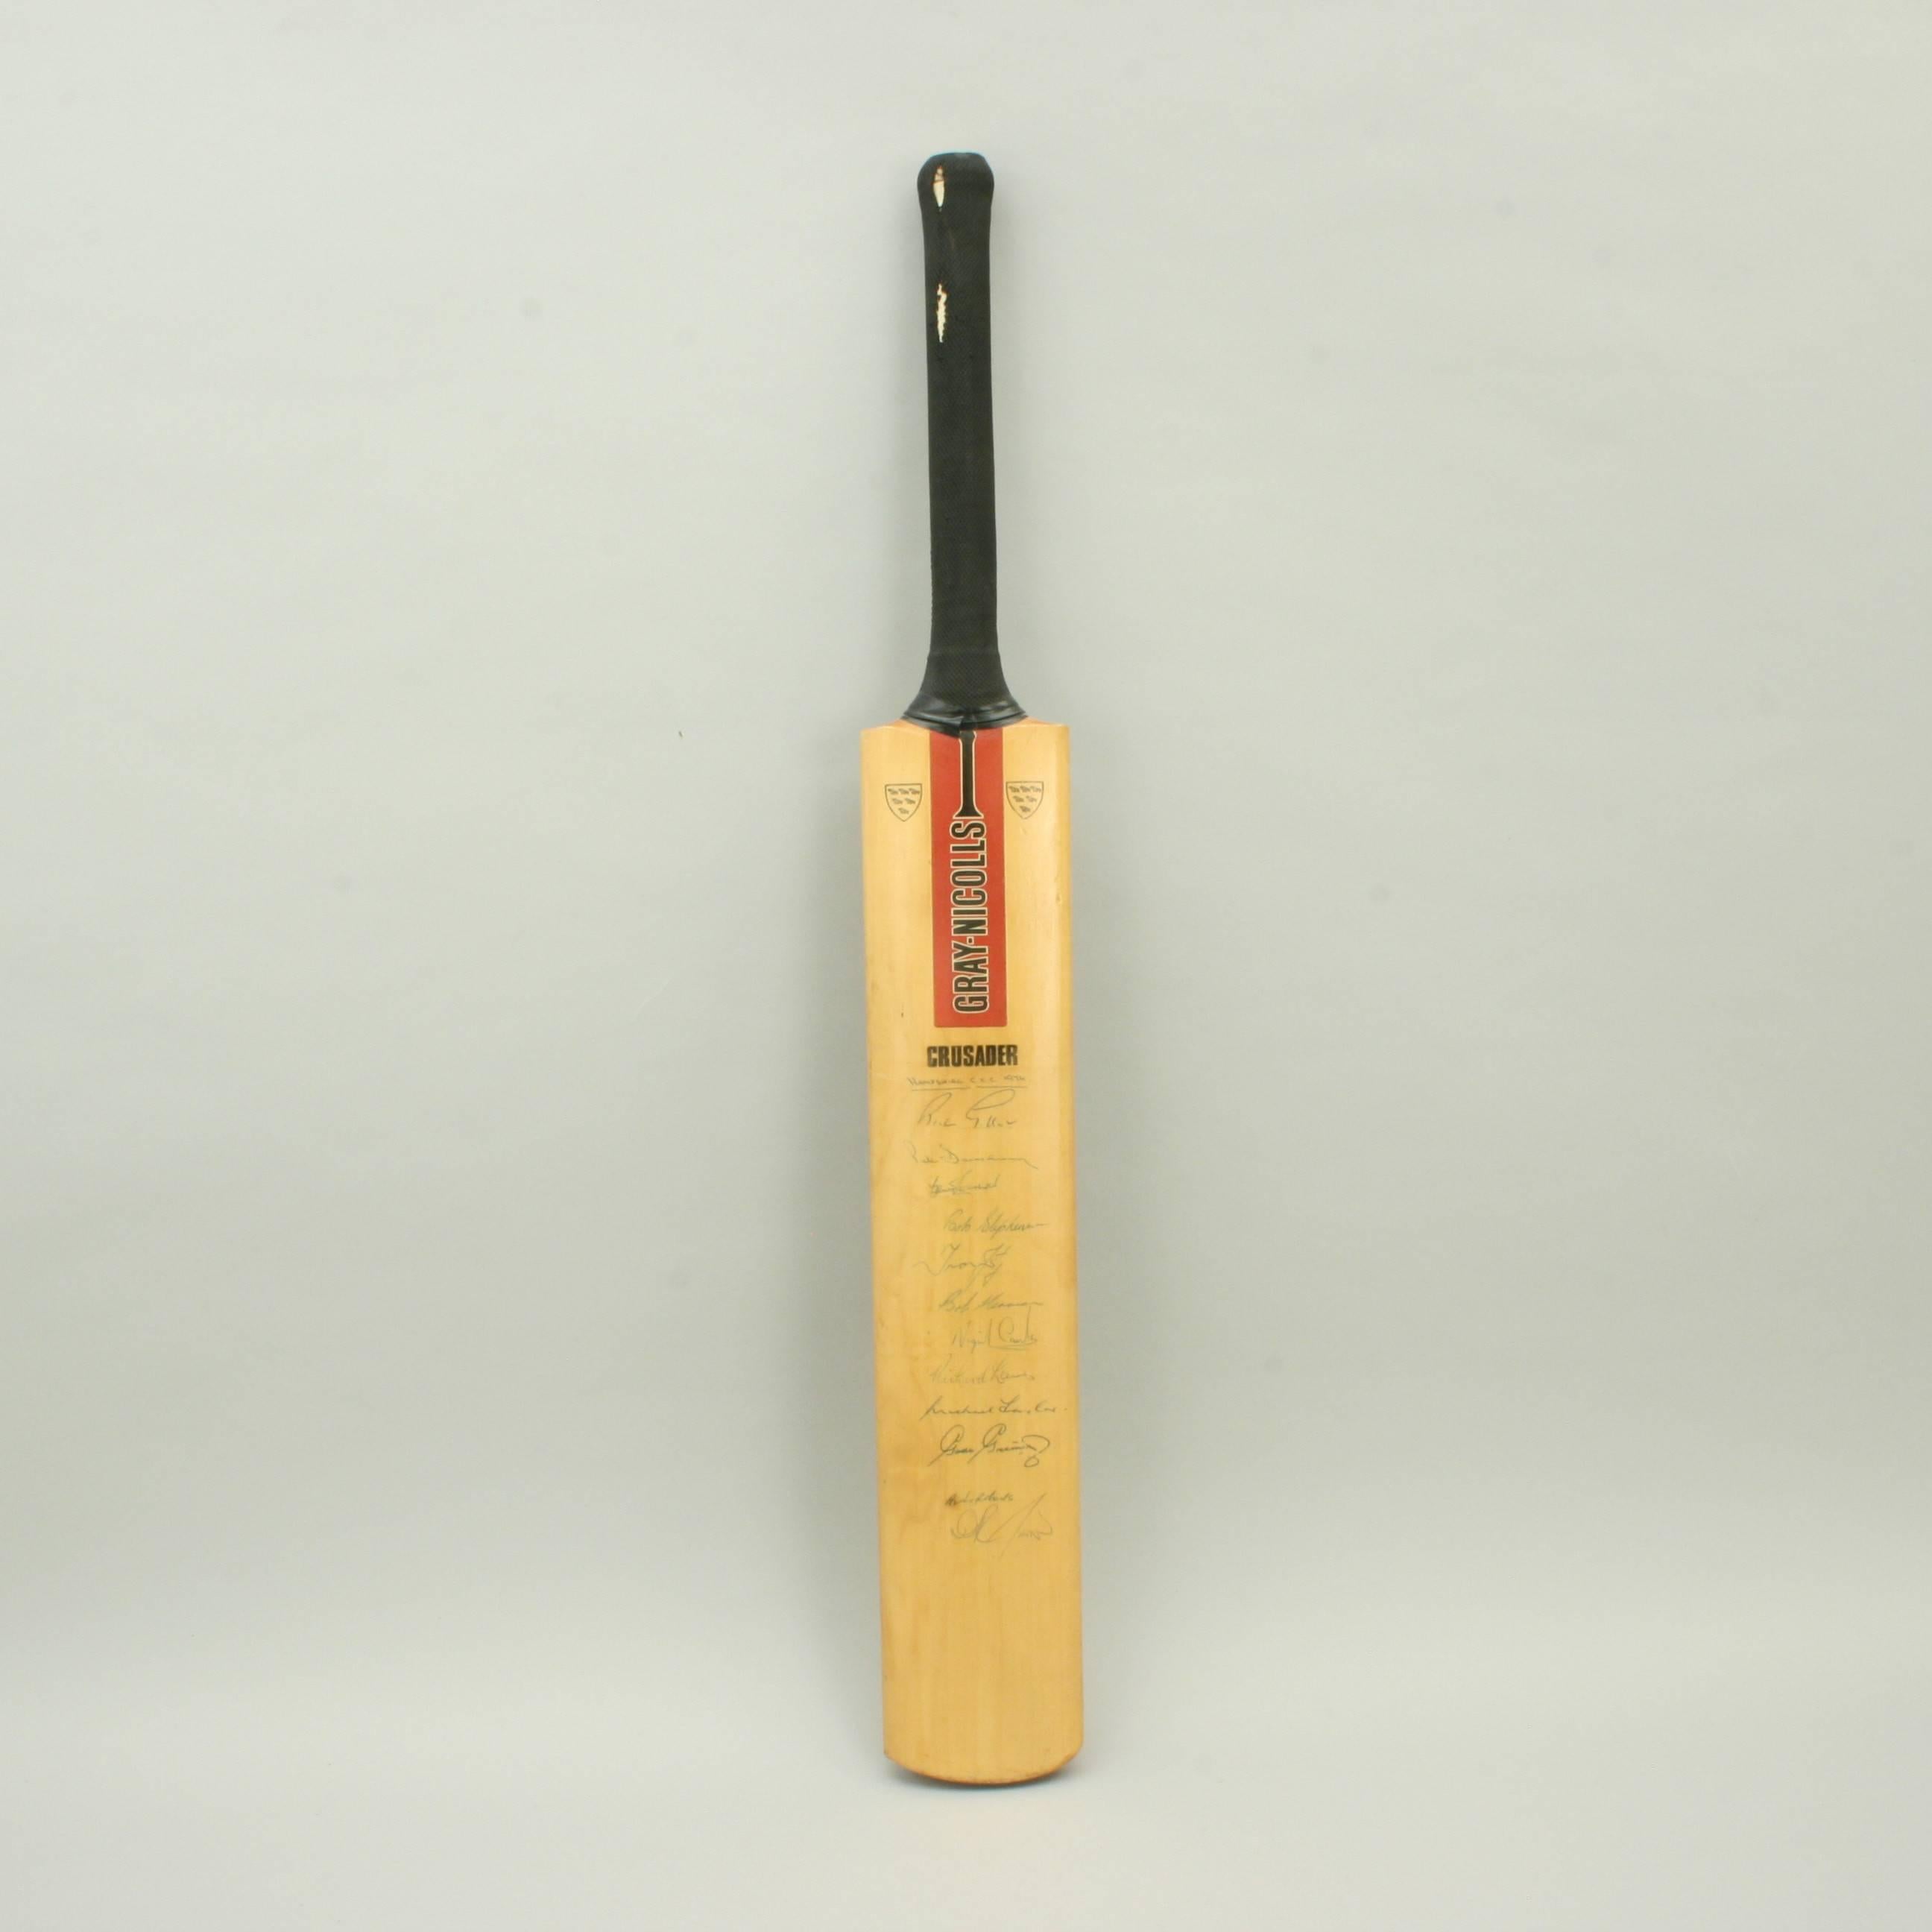 signed cricket bats for sale